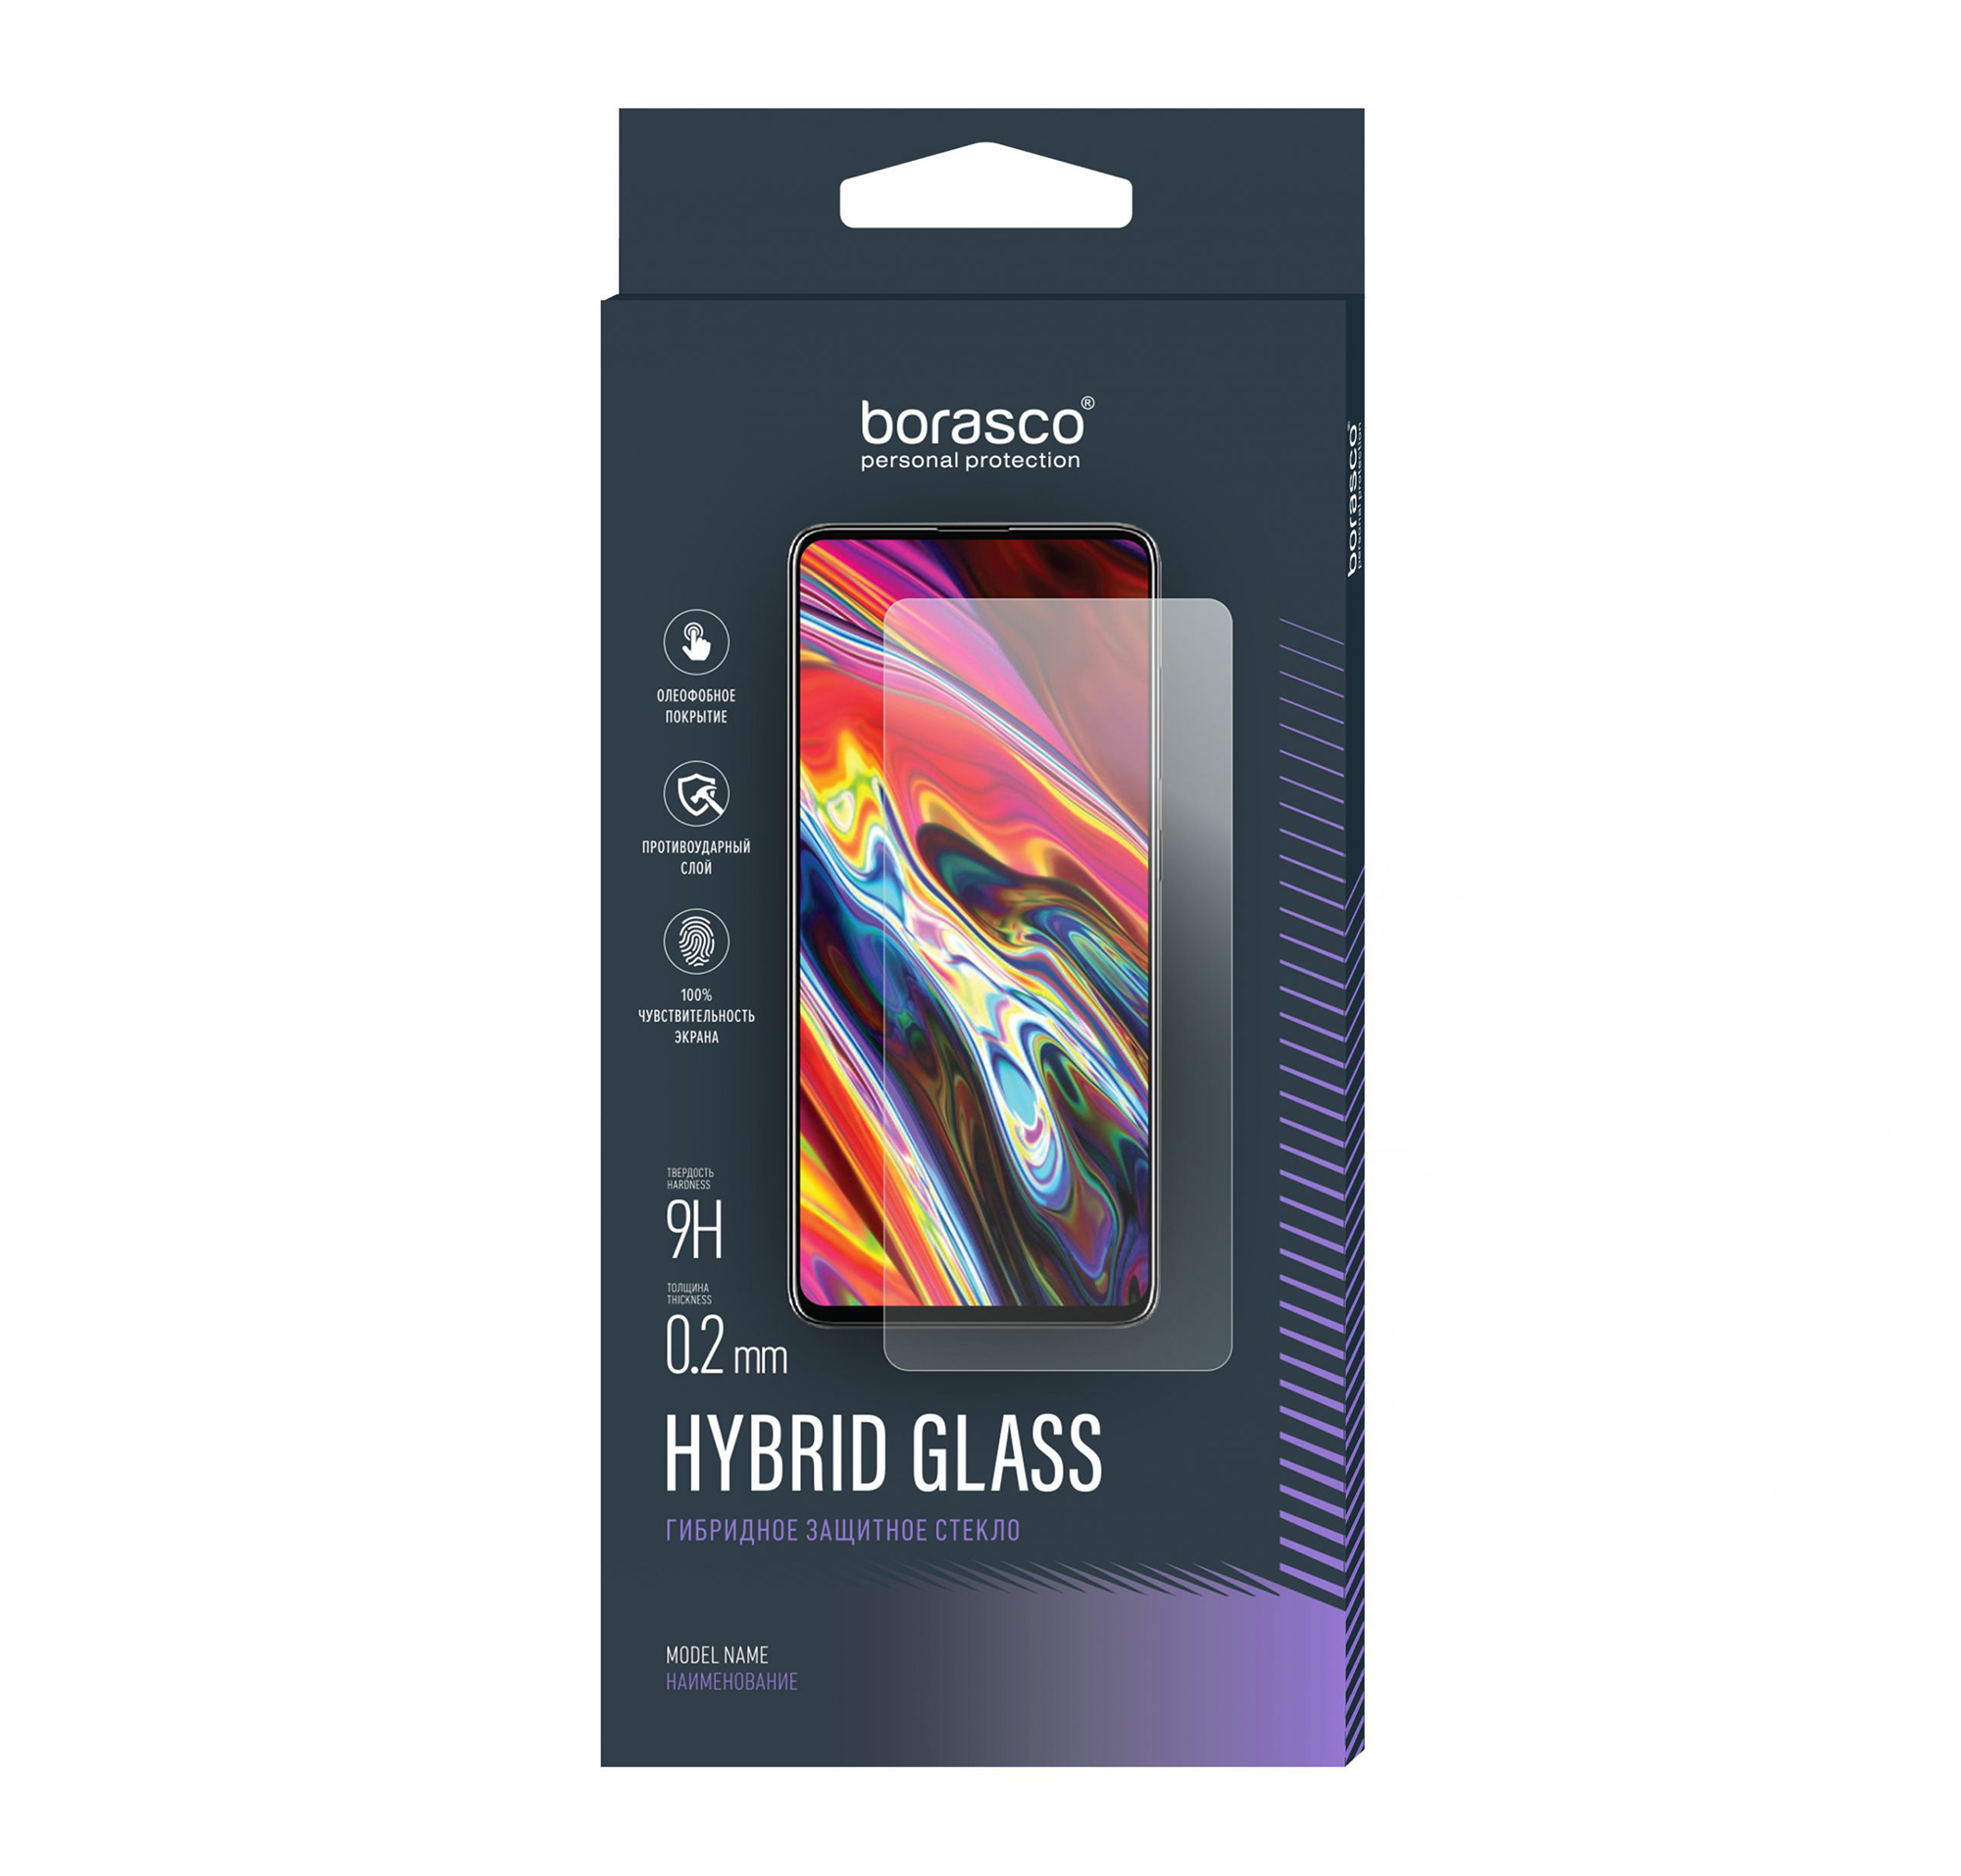 Защитное стекло Hybrid Glass для Huawei MediaPad T3 8